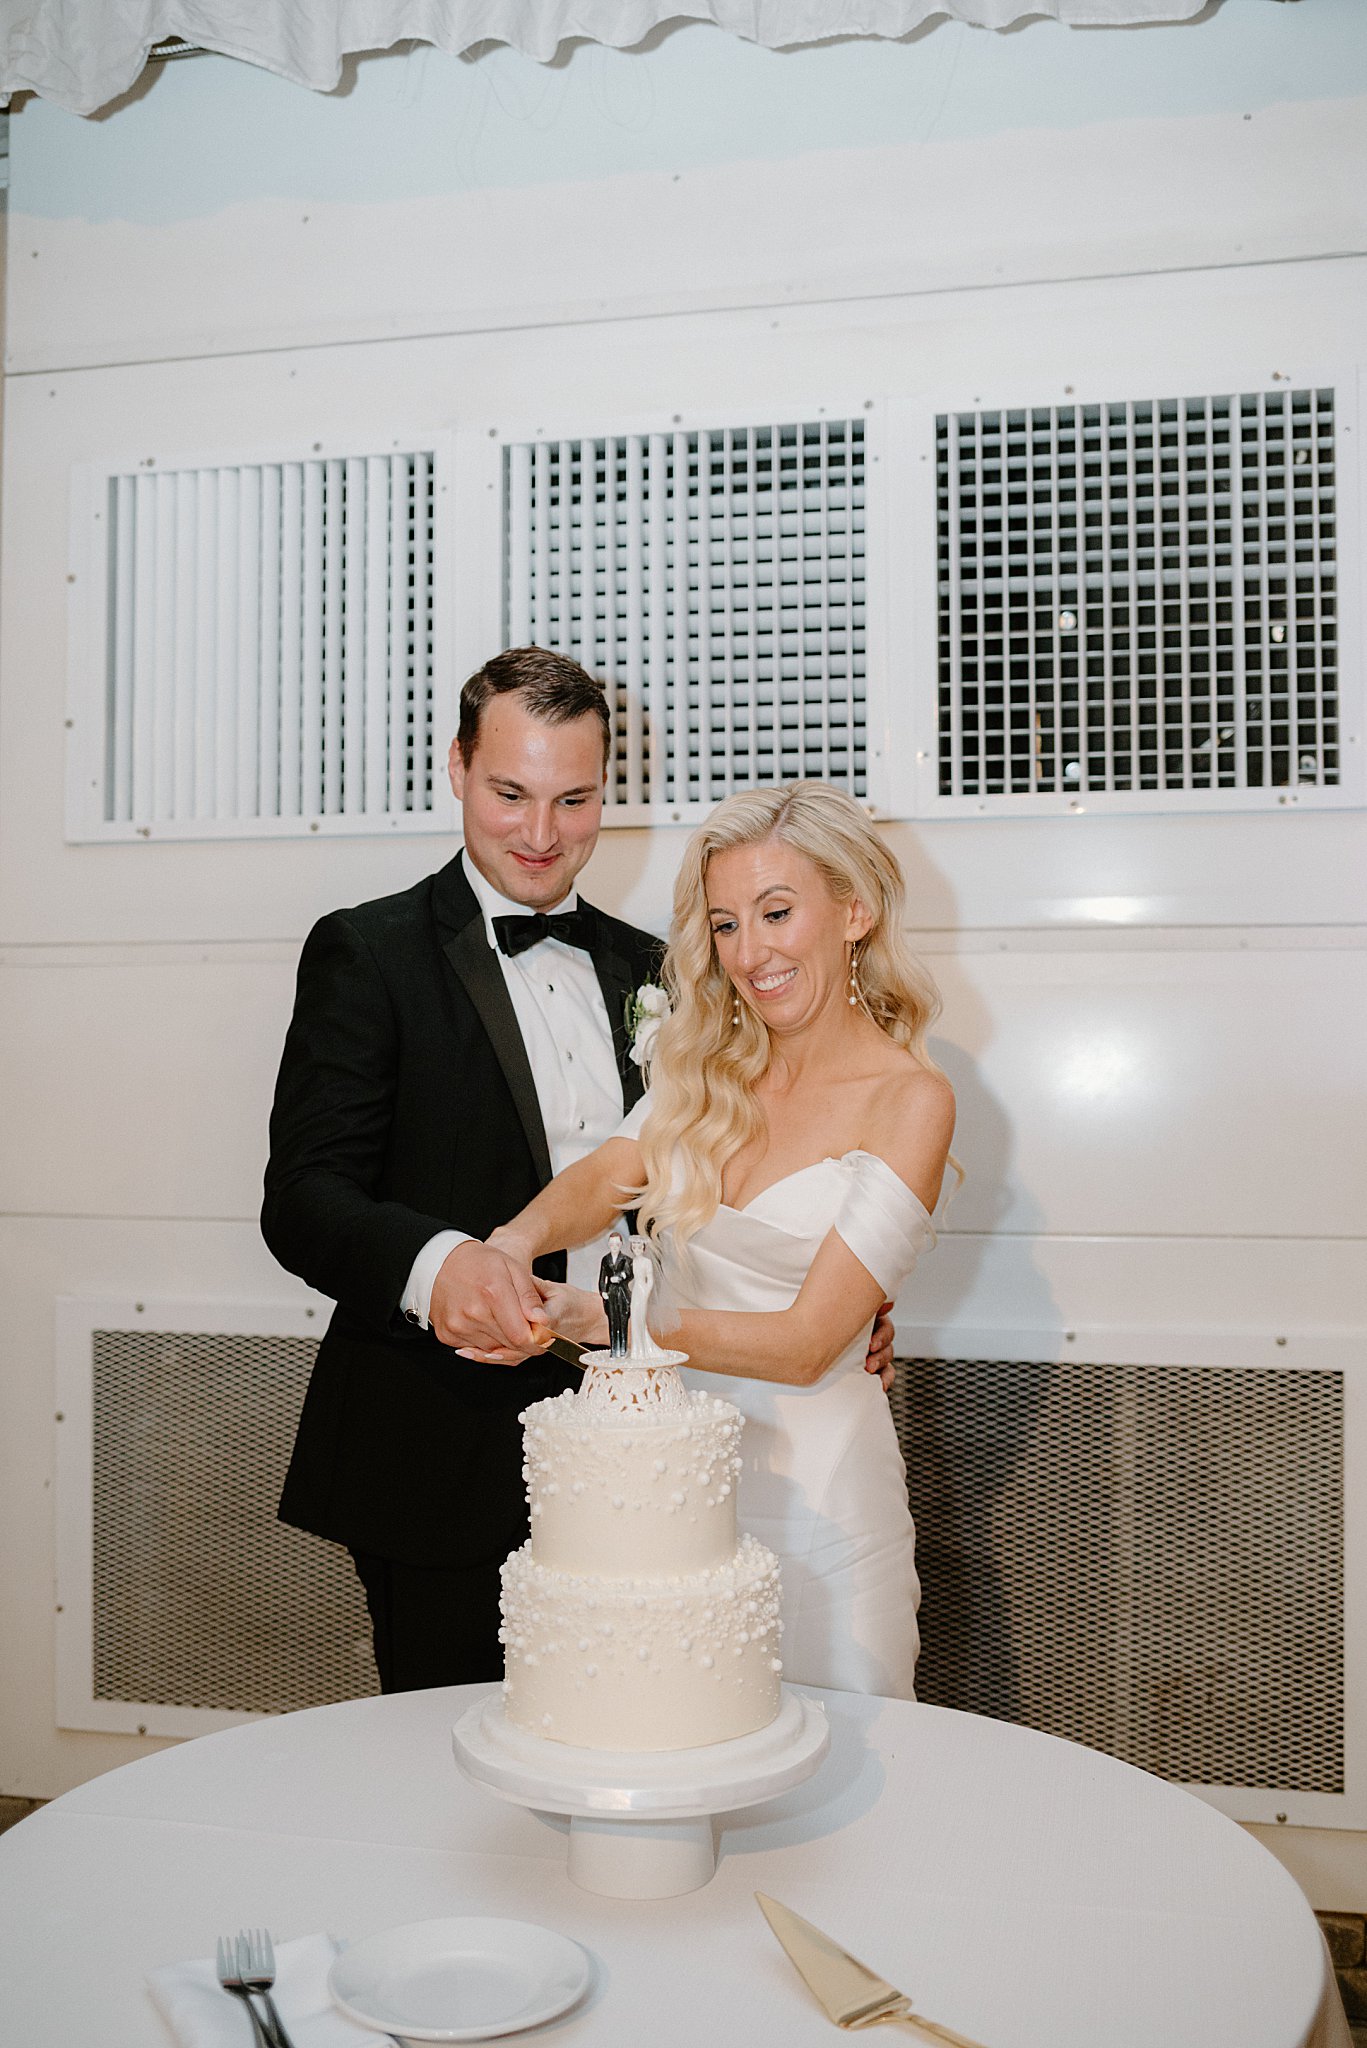 newlyweds cut their wedding cake after romantic Galleria Marchetti ceremony